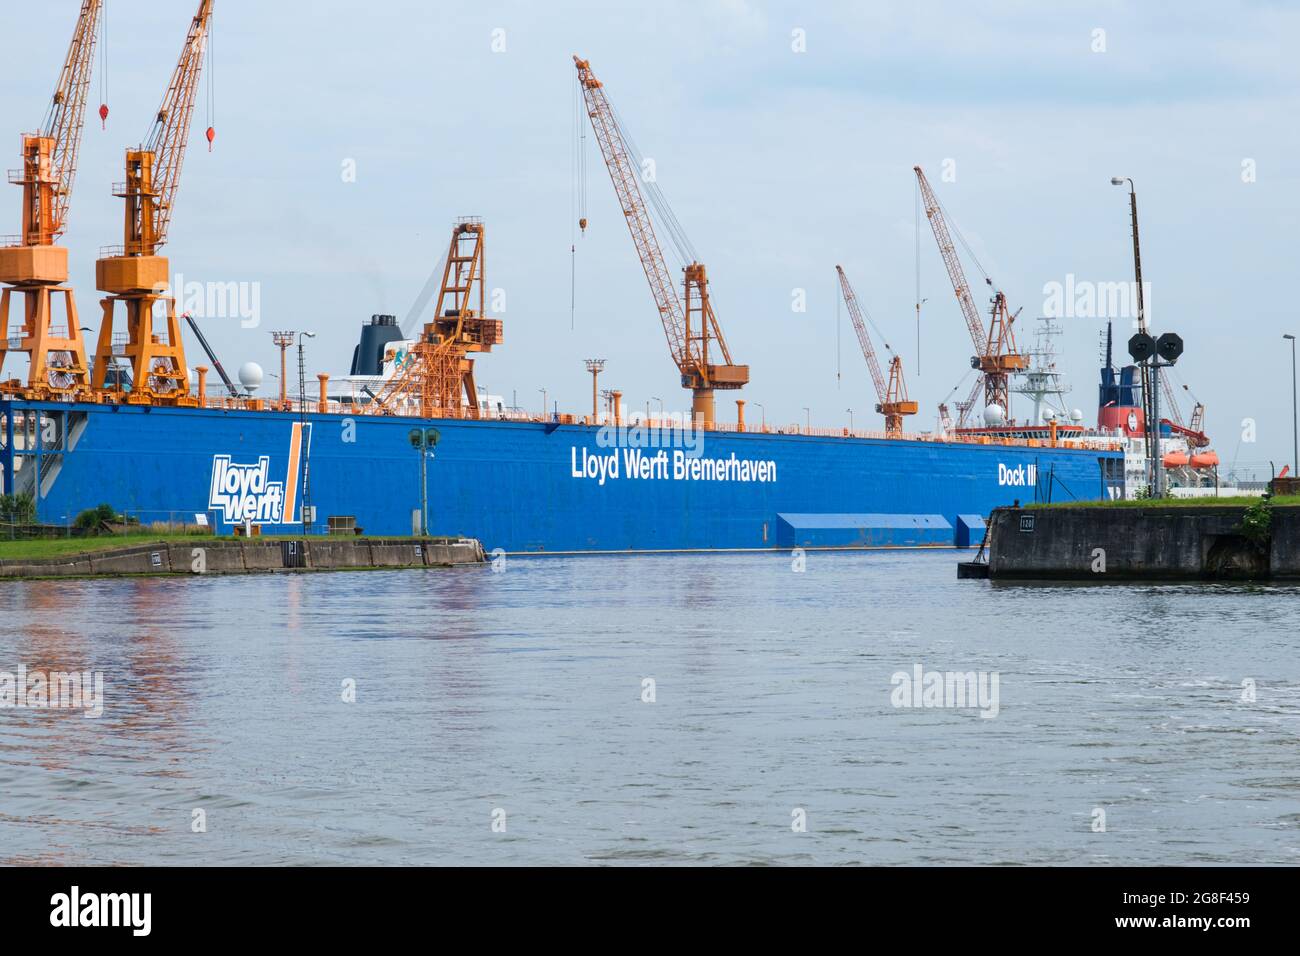 Lloyd Werft Bremerhaven Dock 3 Stock Photo